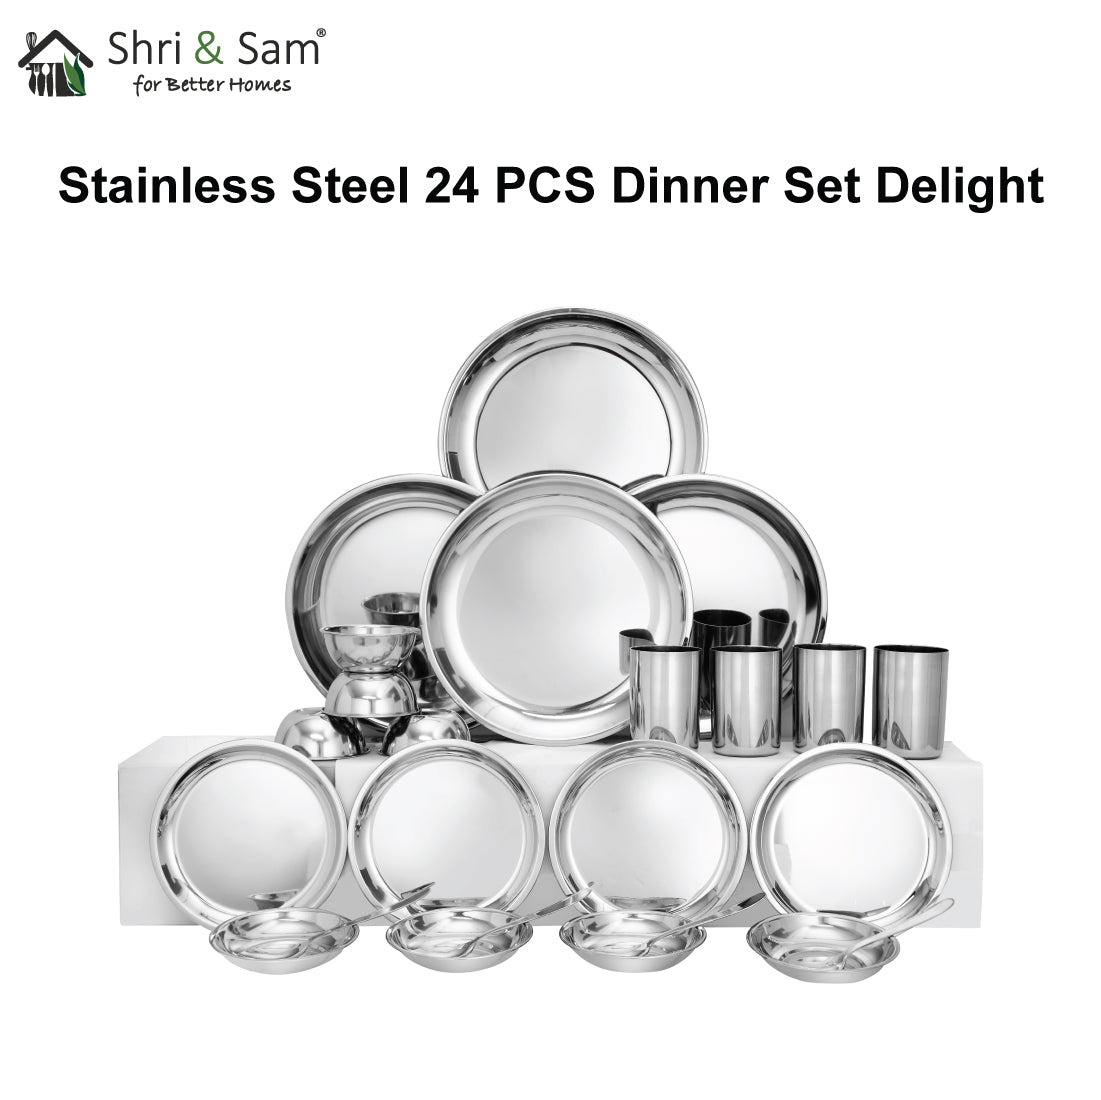 Stainless Steel 24 PCS Dinner set (4 People) Delight